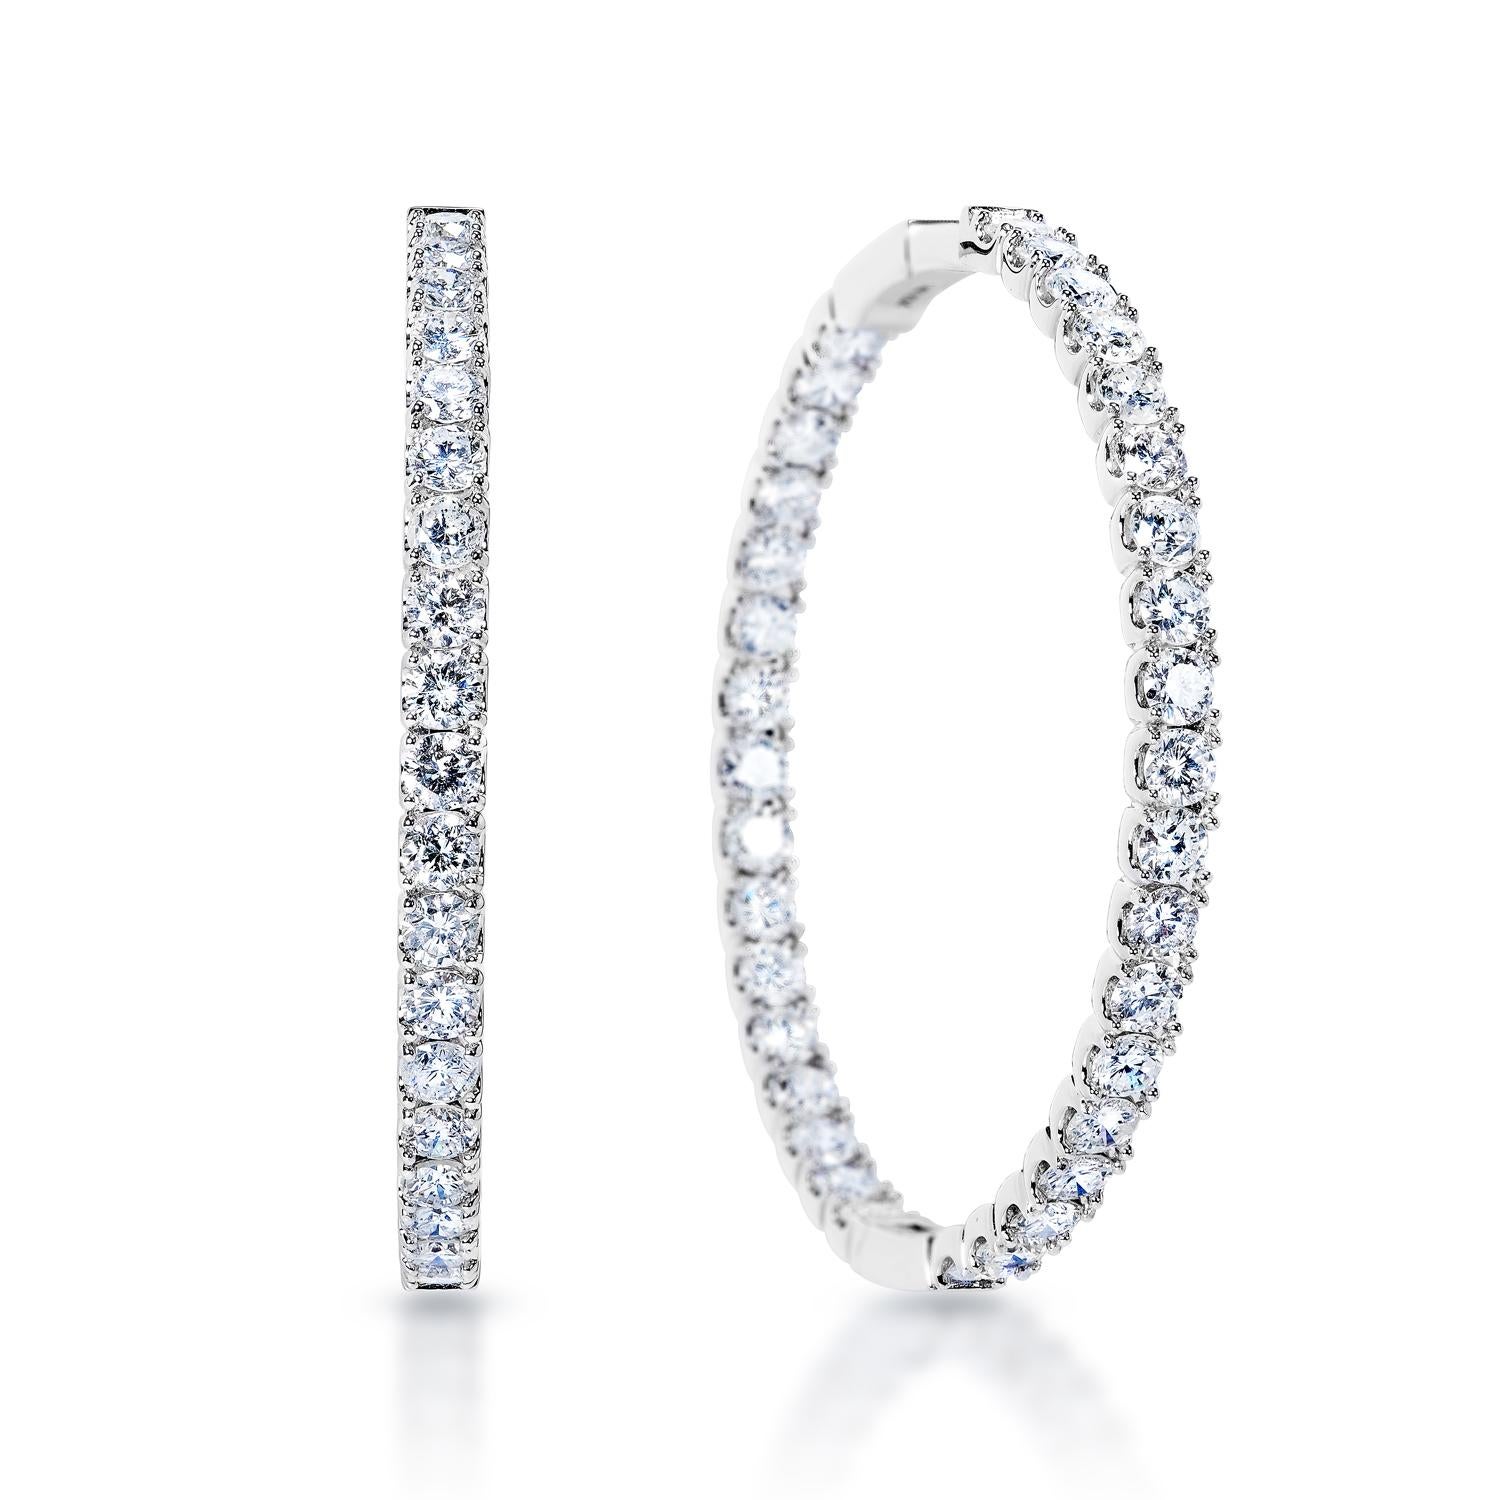 Diamond Hoop Earrings:

Carat Weight: 11.60 Carats
Shape: Round Brilliant Cut
Metal: 14 Karat White Gold
Style: Hoop Earrings